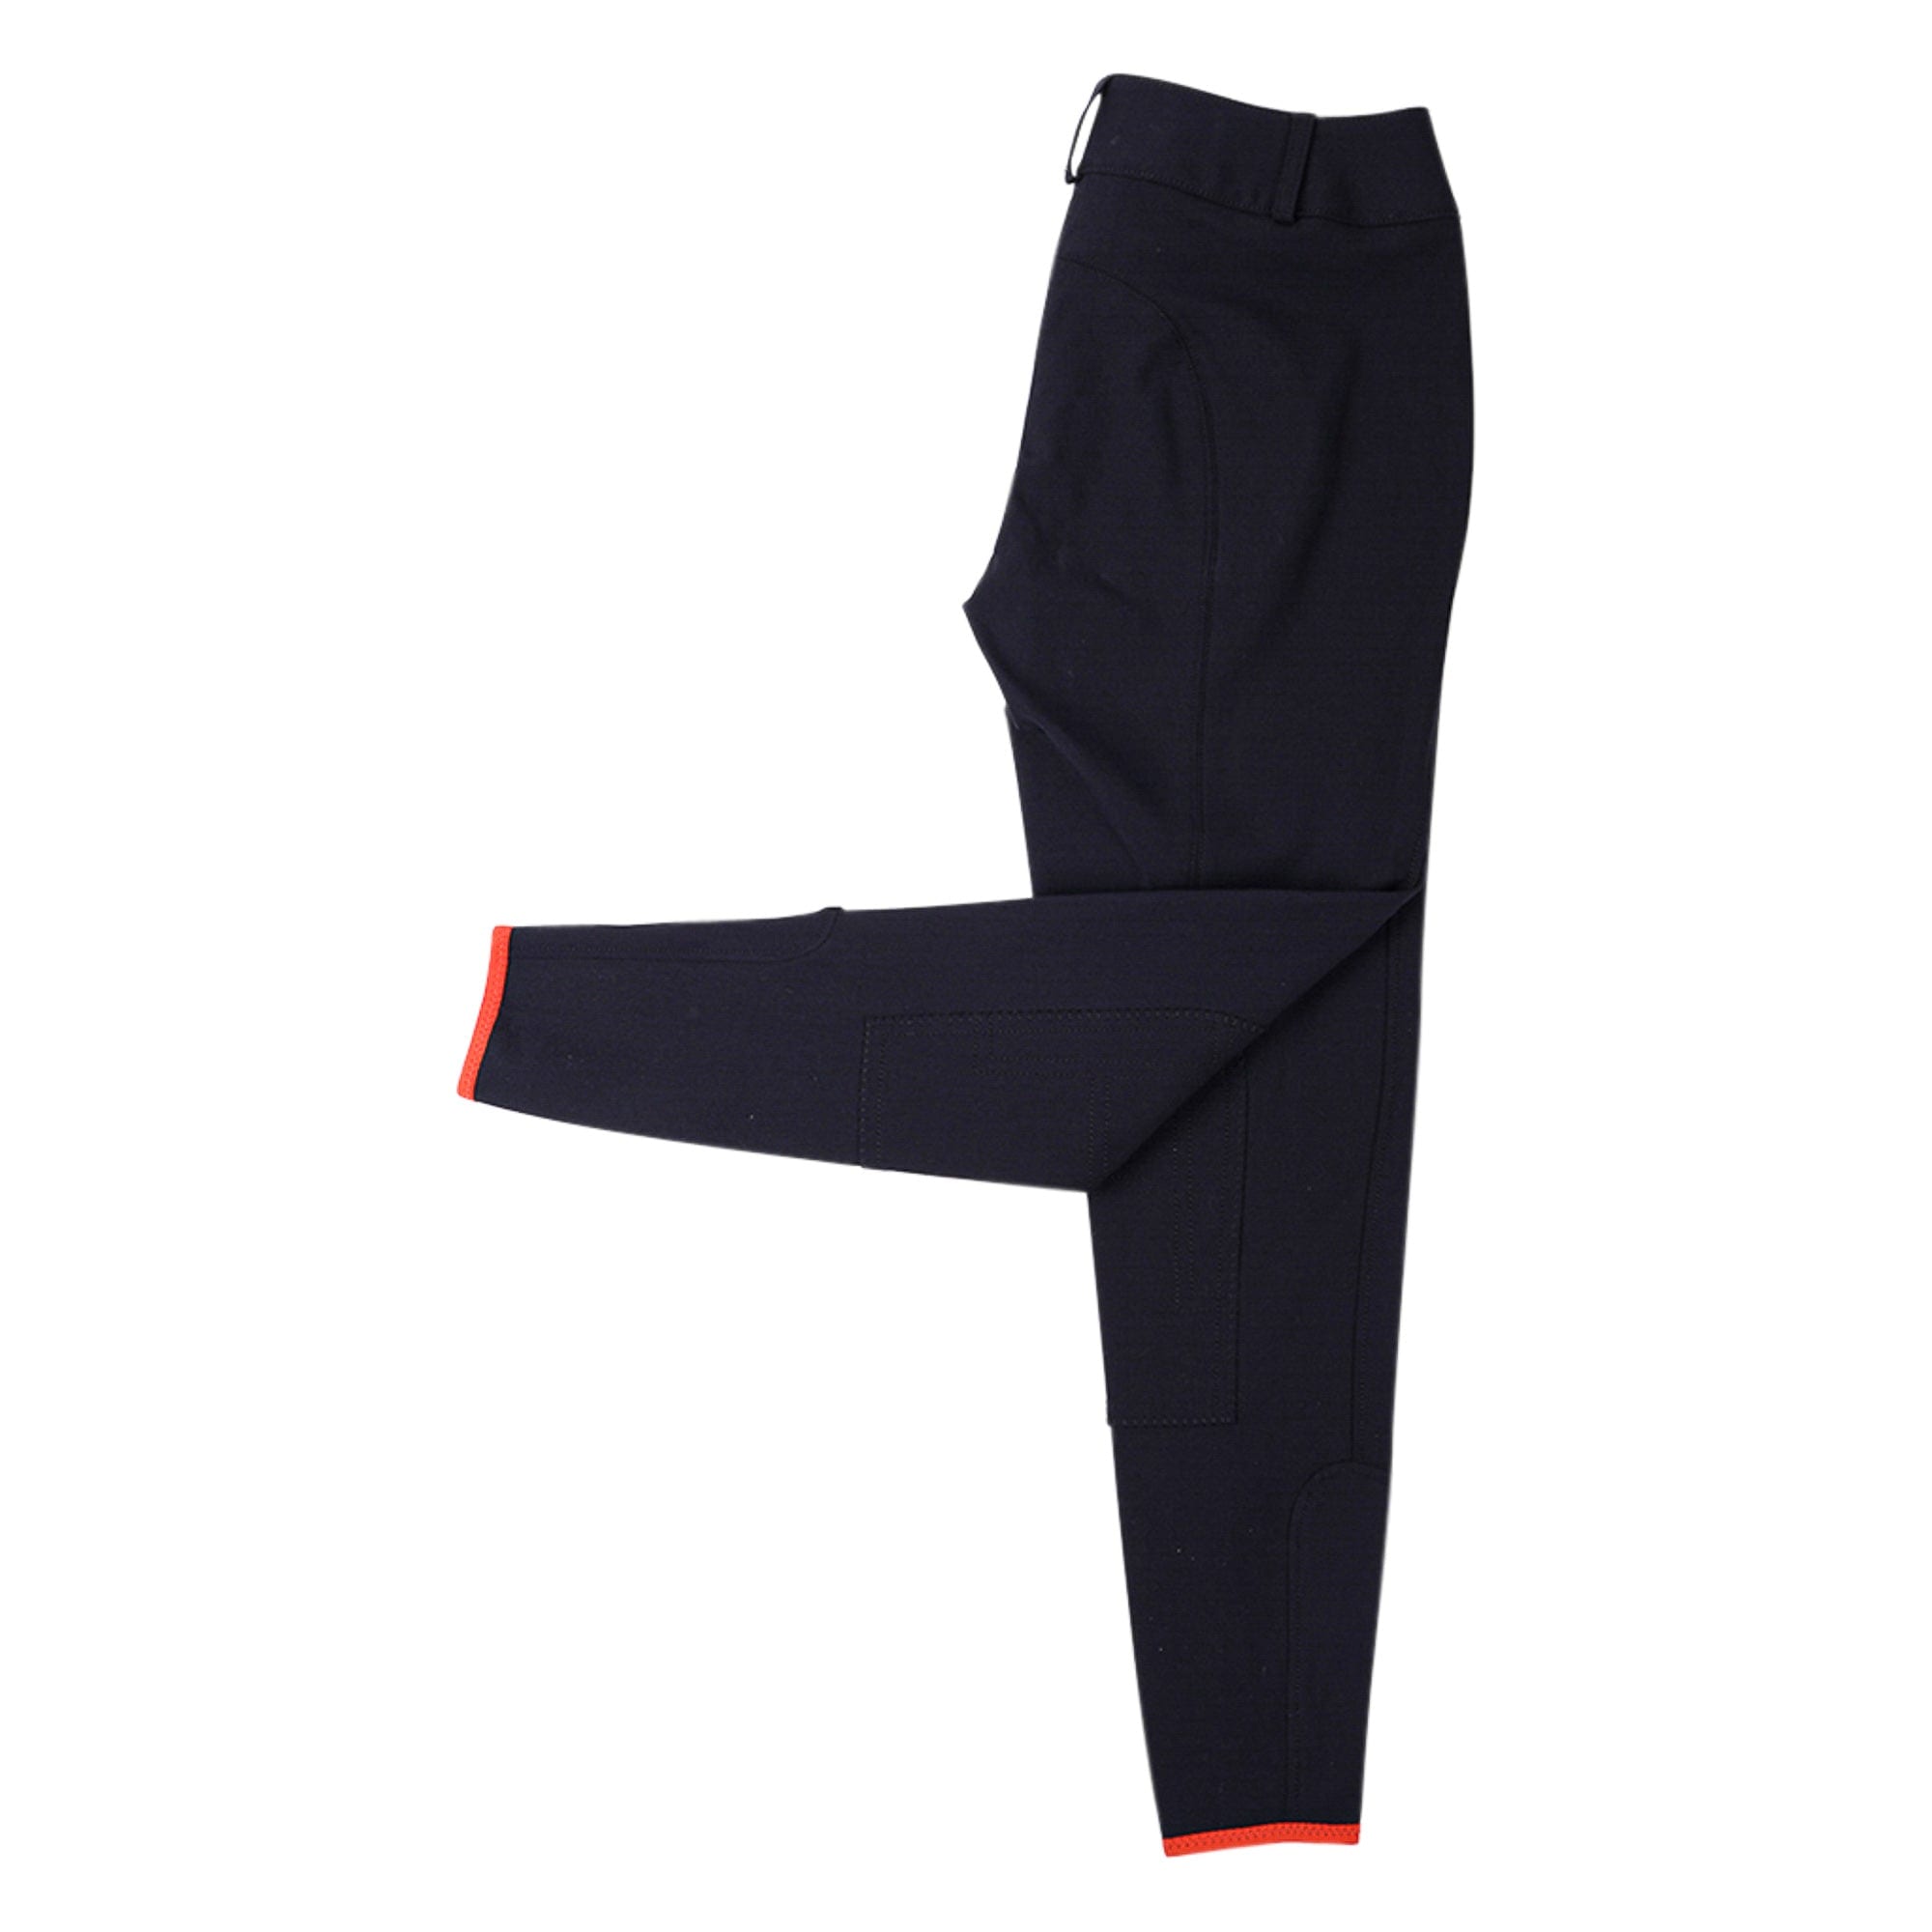 Hermes Swing Dressage Breeches Pant Black / Orange Trim 38 / 4